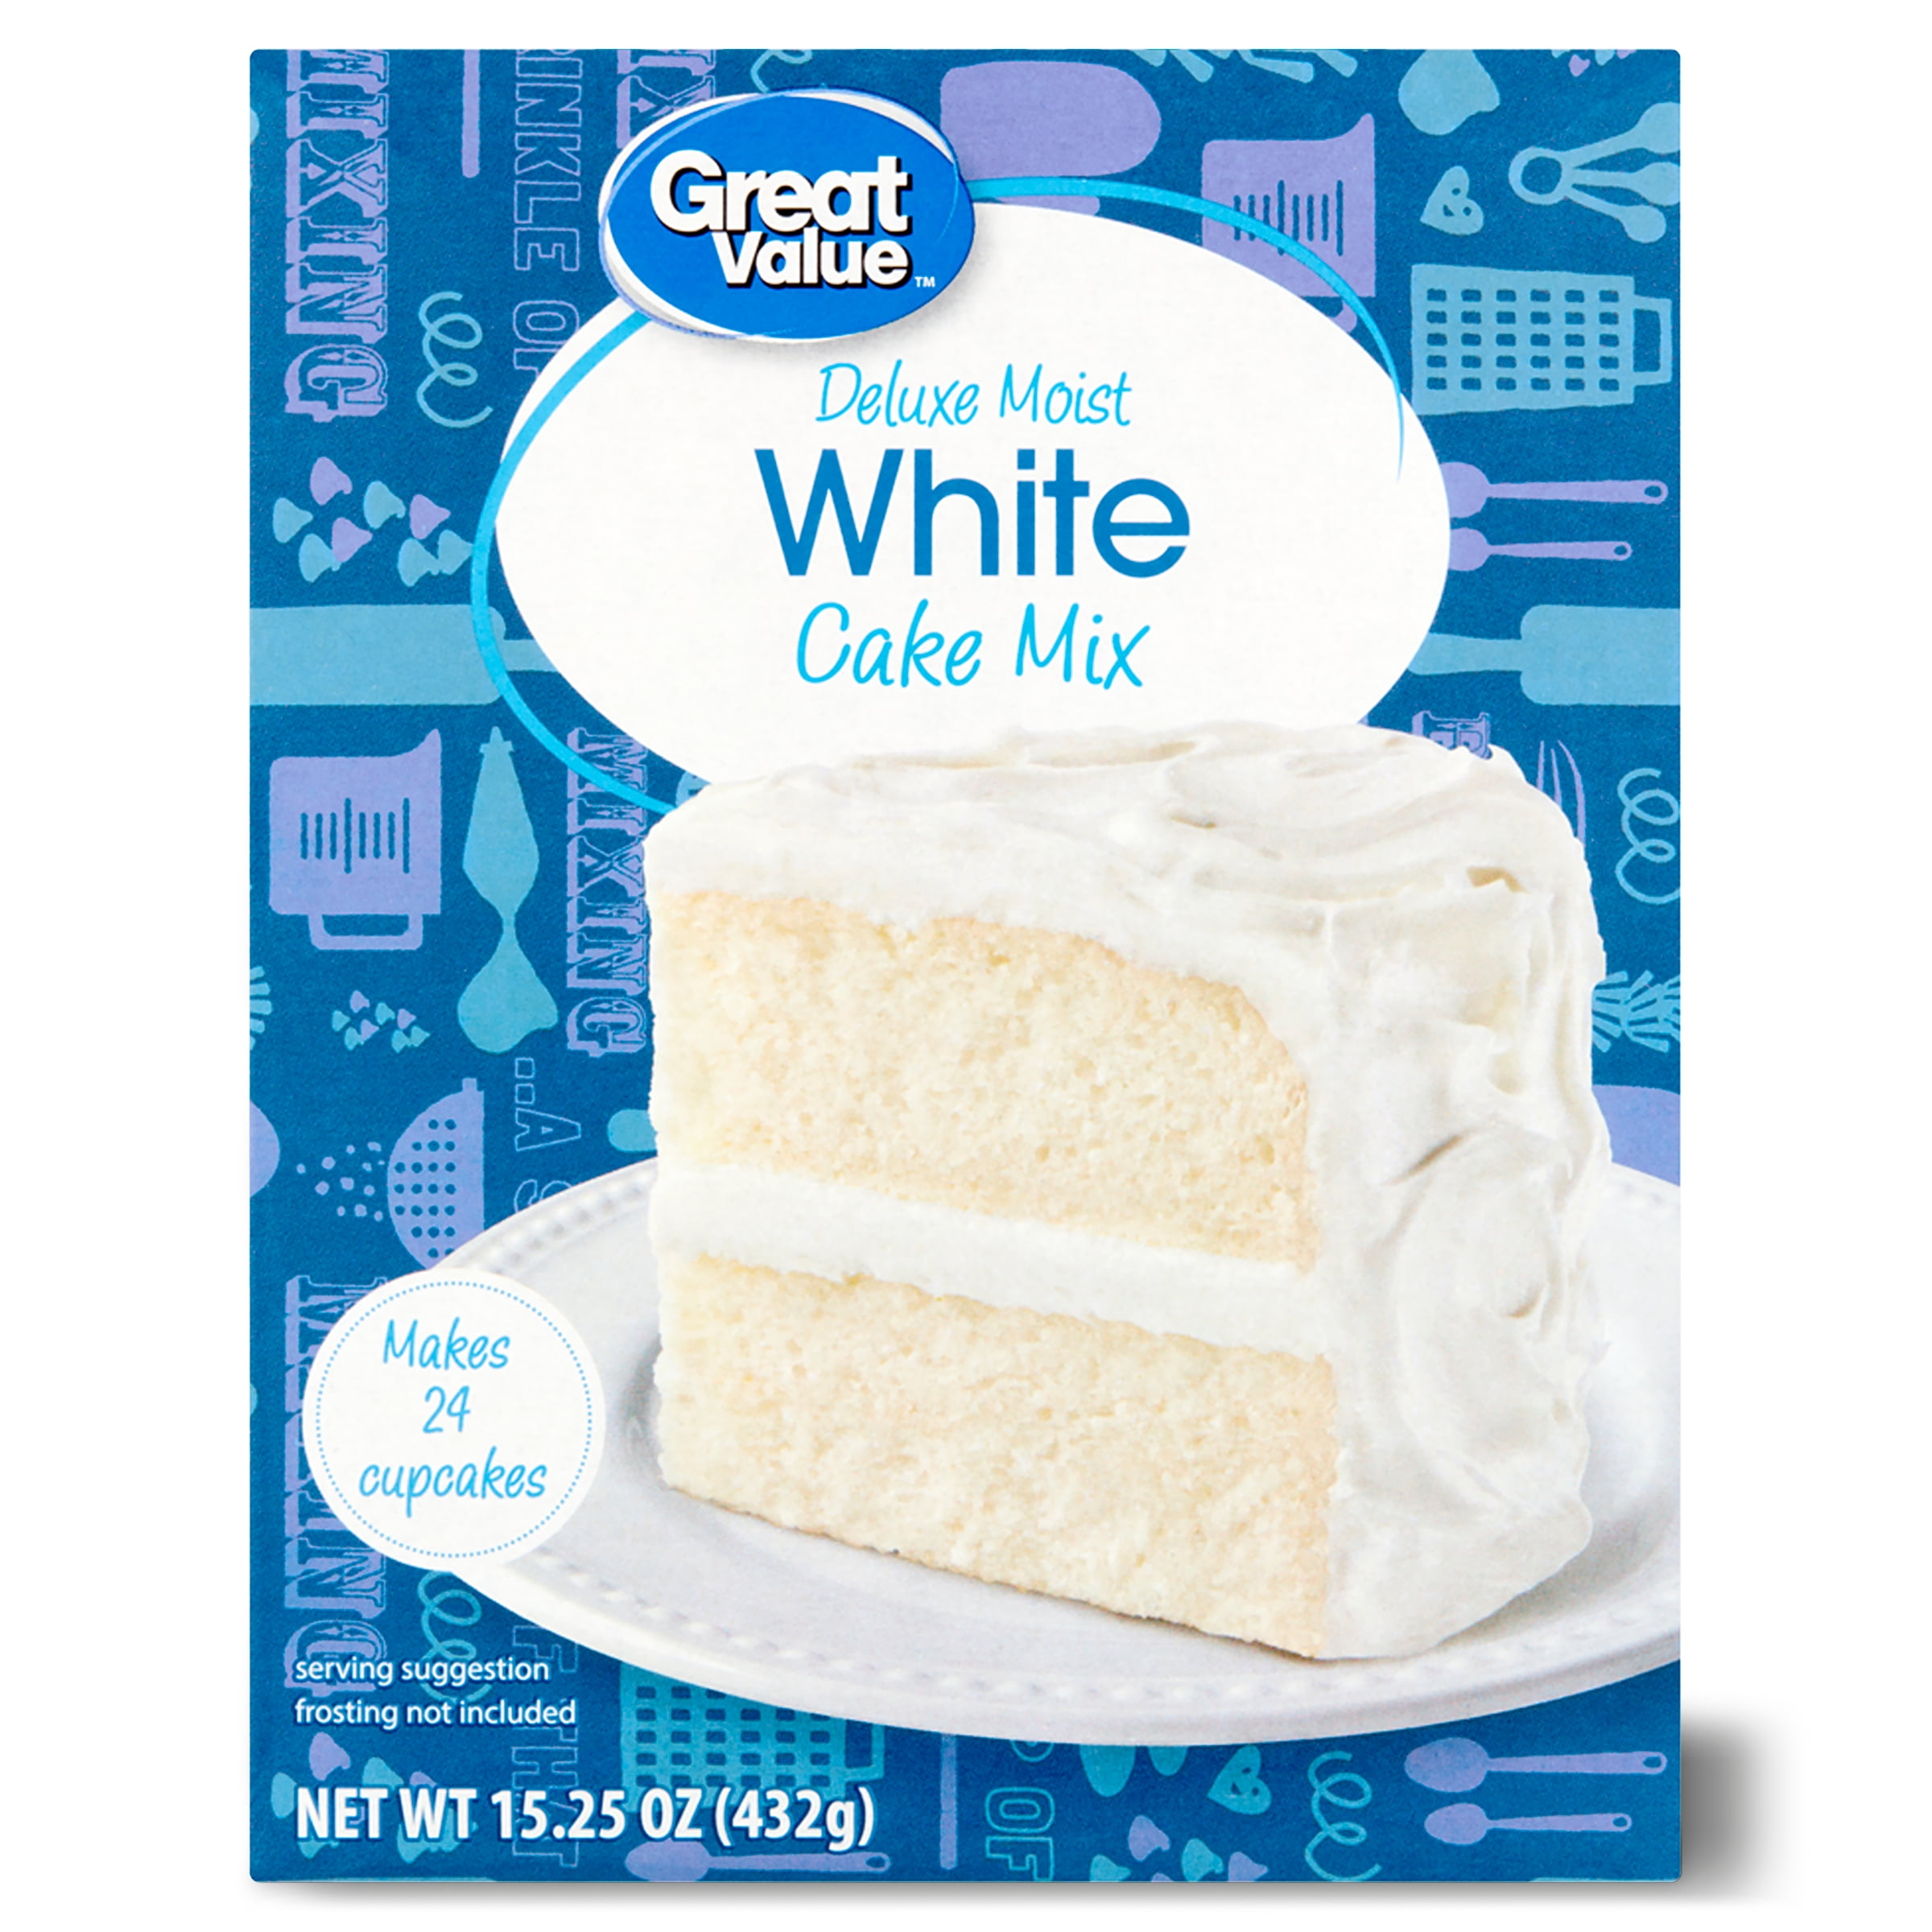 Great Value Deluxe Moist White Cake Mix, 15.25 oz